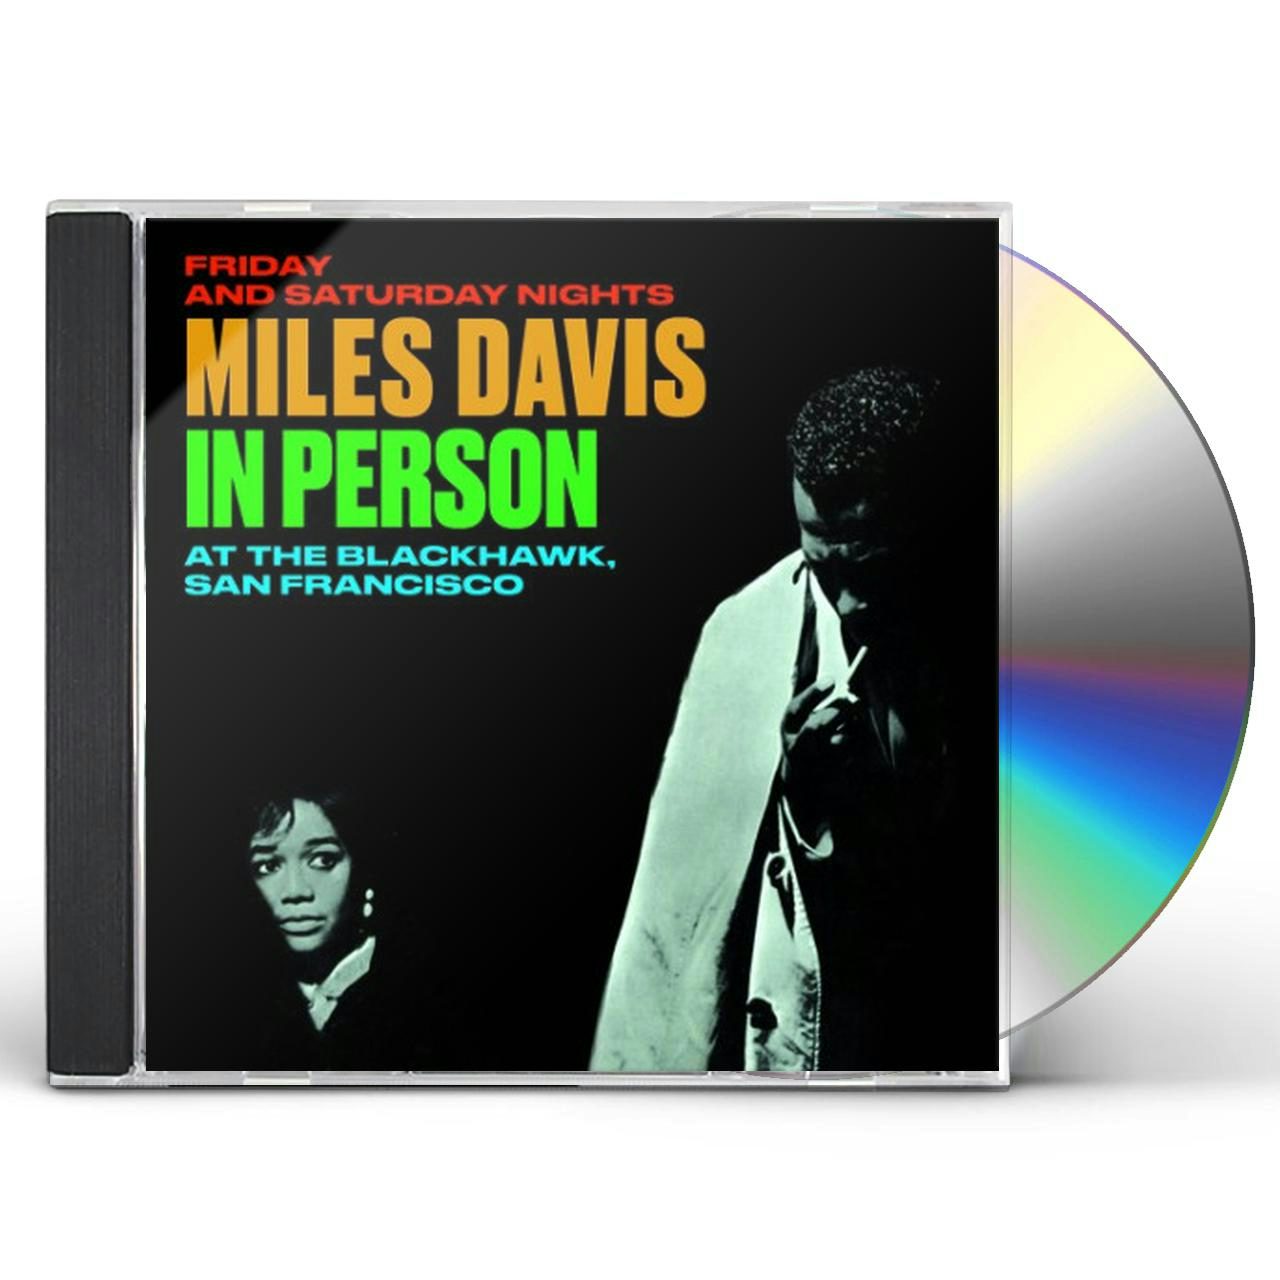 Miles Davis IN PERSON AT THE BLACKHAWK SAN FRANCISCO